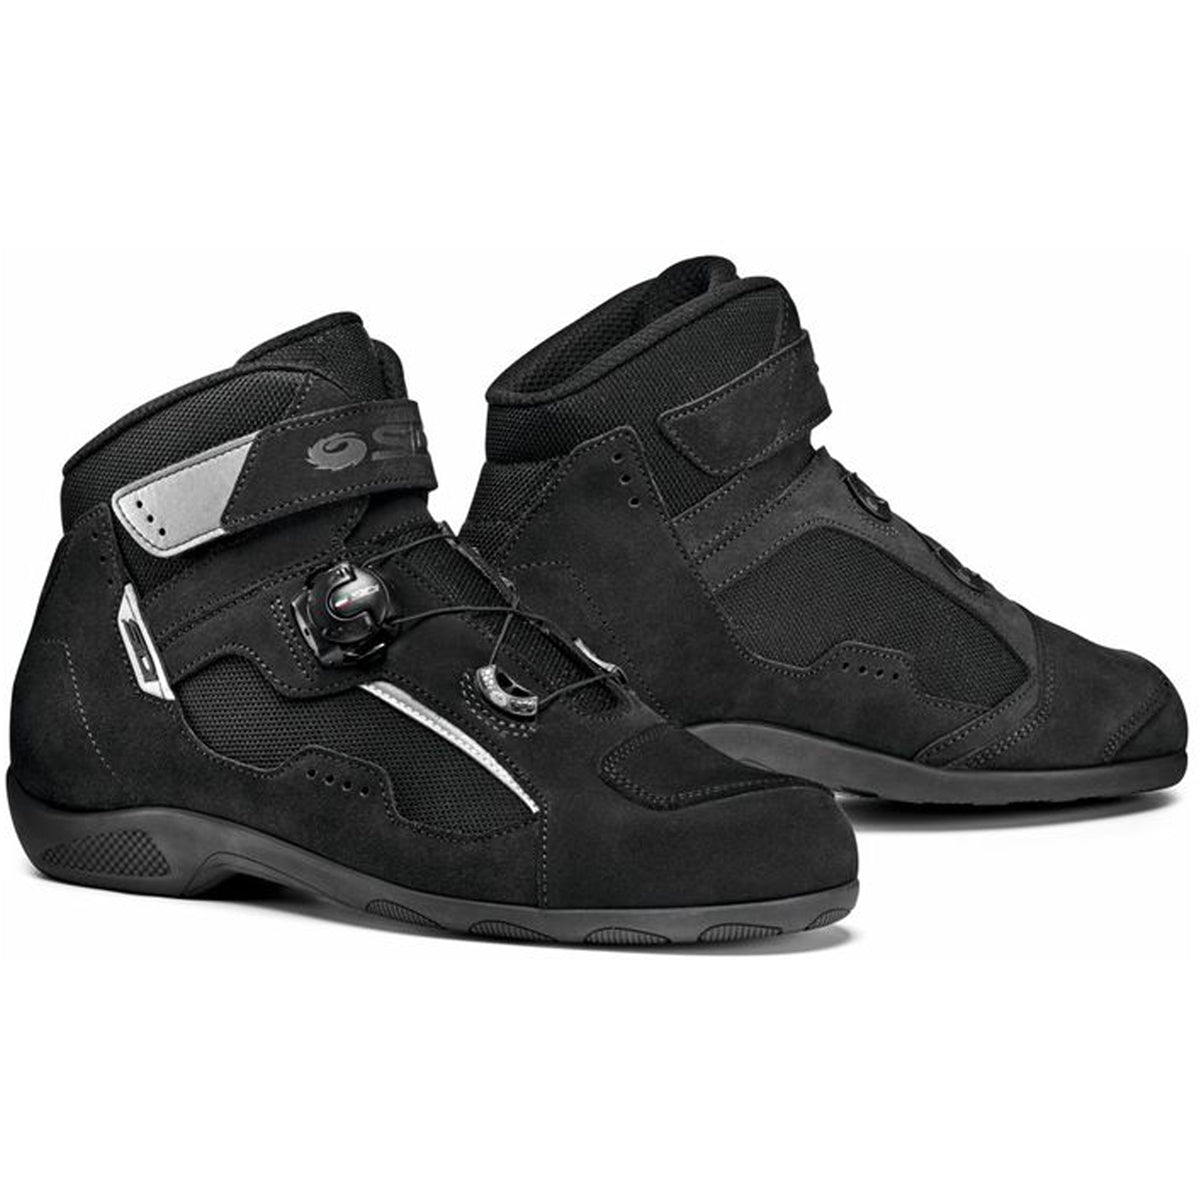 Sidi Duna Special Boots - Black